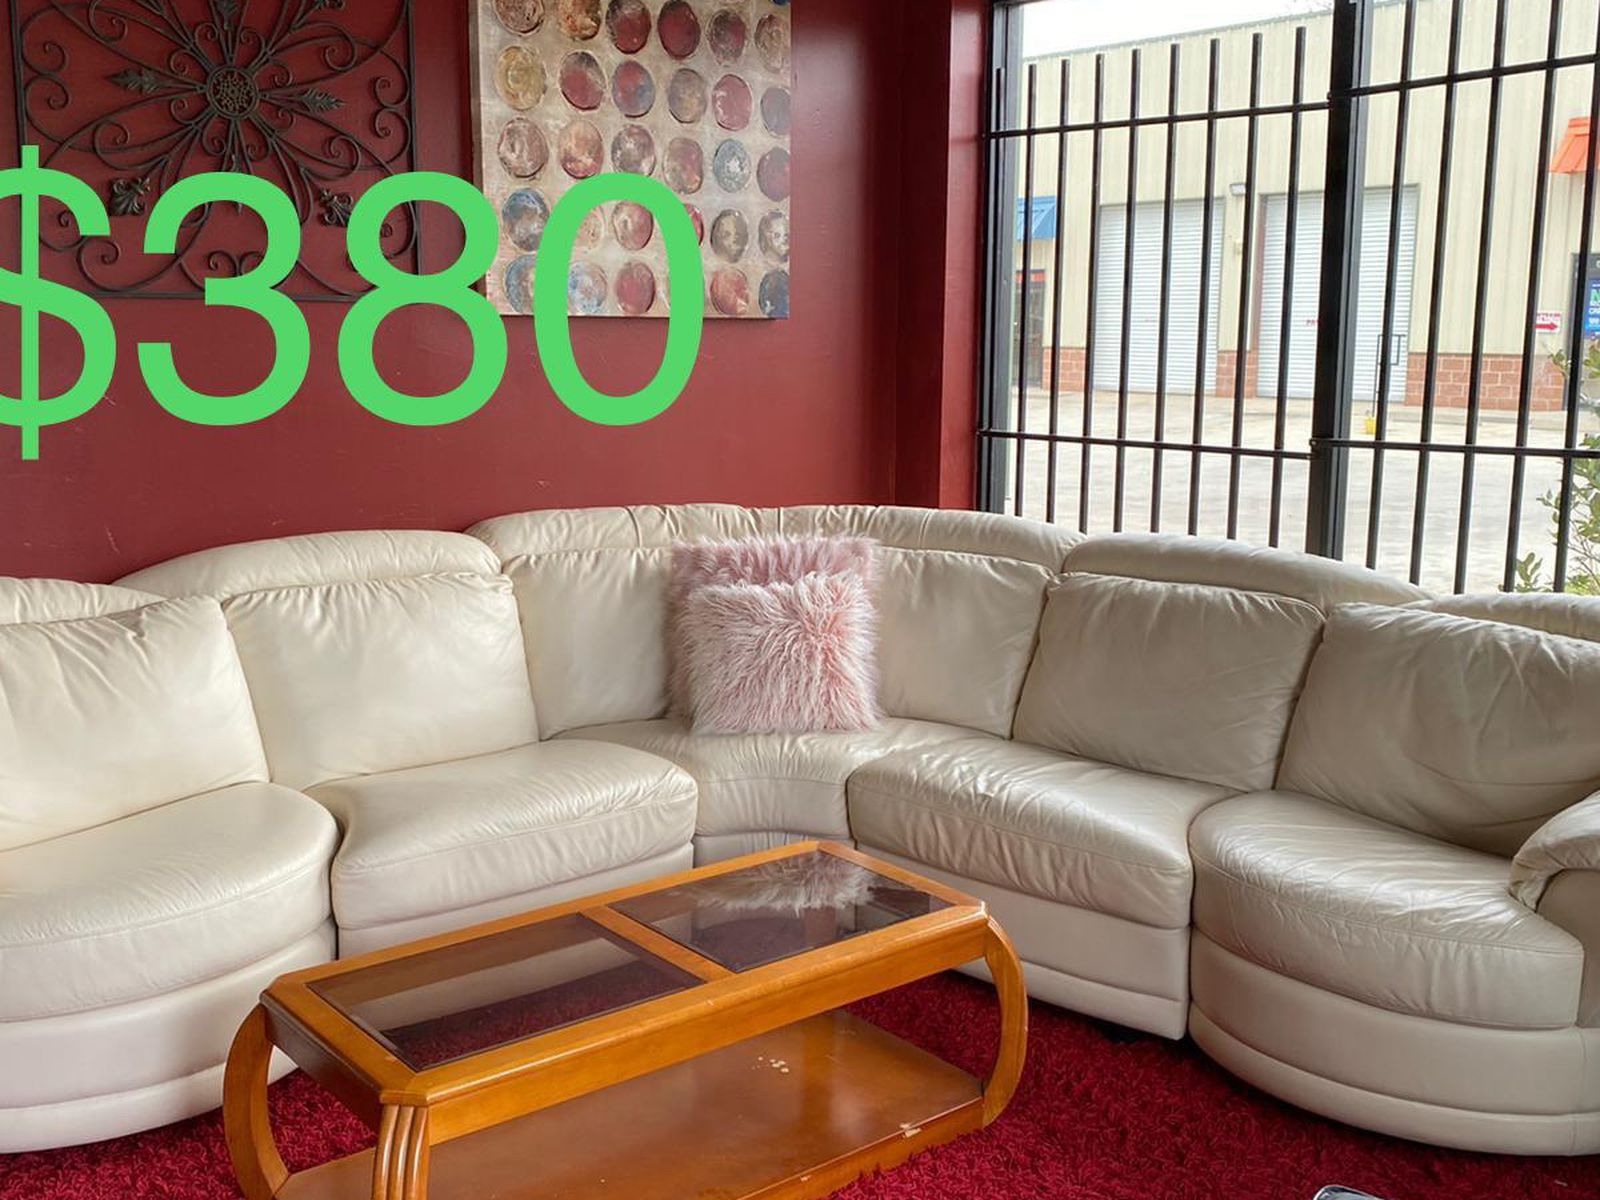 $380 Sectional Sofa 🛋